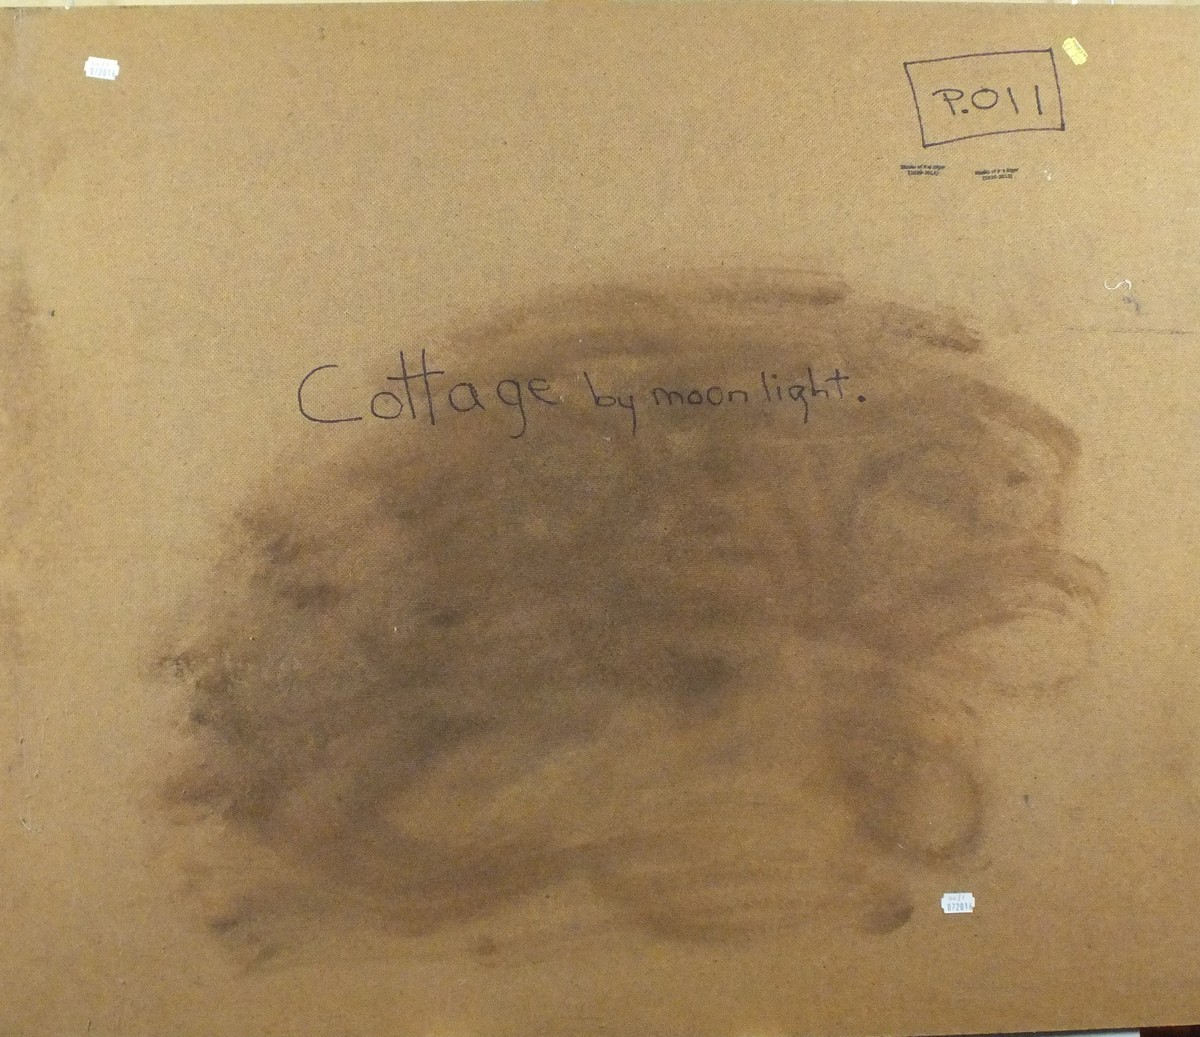 Pat ALGAR (1939-2013), Oil on board, 'Cottage by Moonlight', Bears artist's studio stamp, - Image 2 of 2